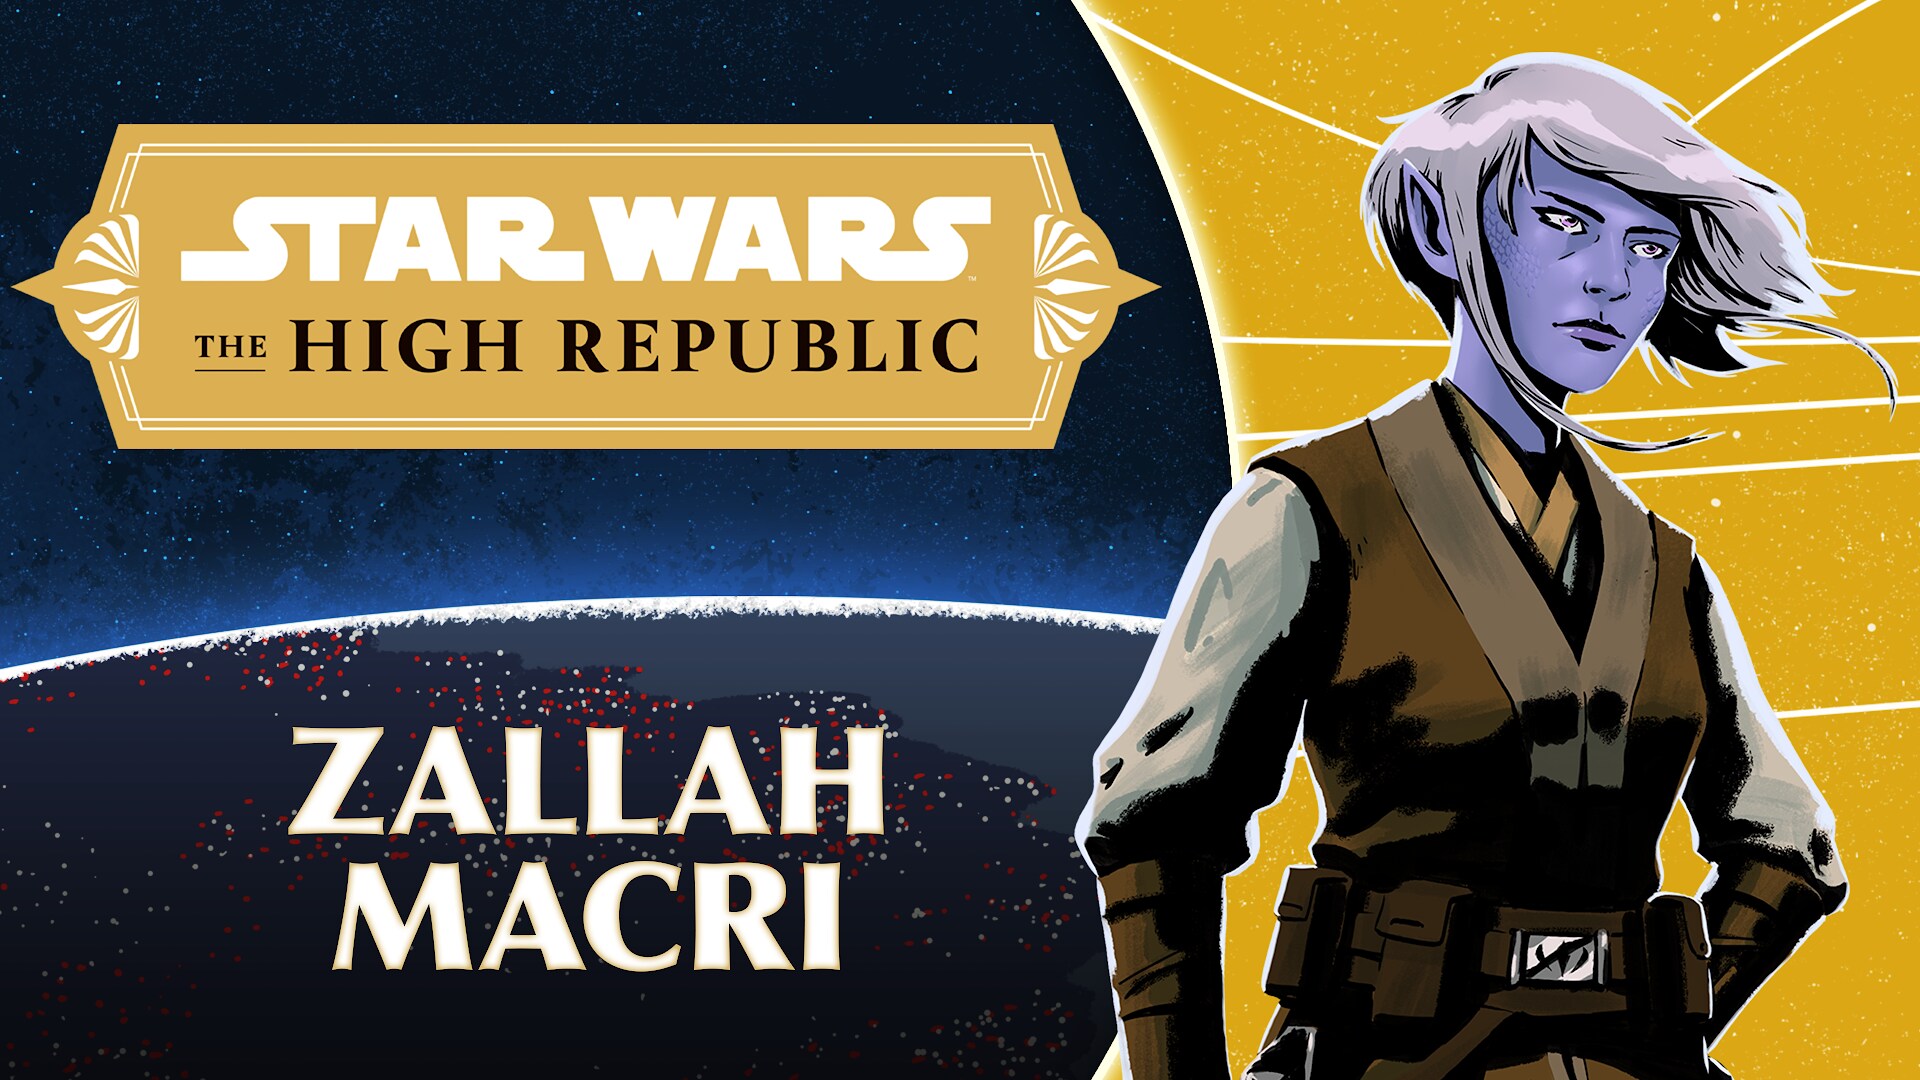 Jedi Knight Zallah Macri: Characters of the High Republic